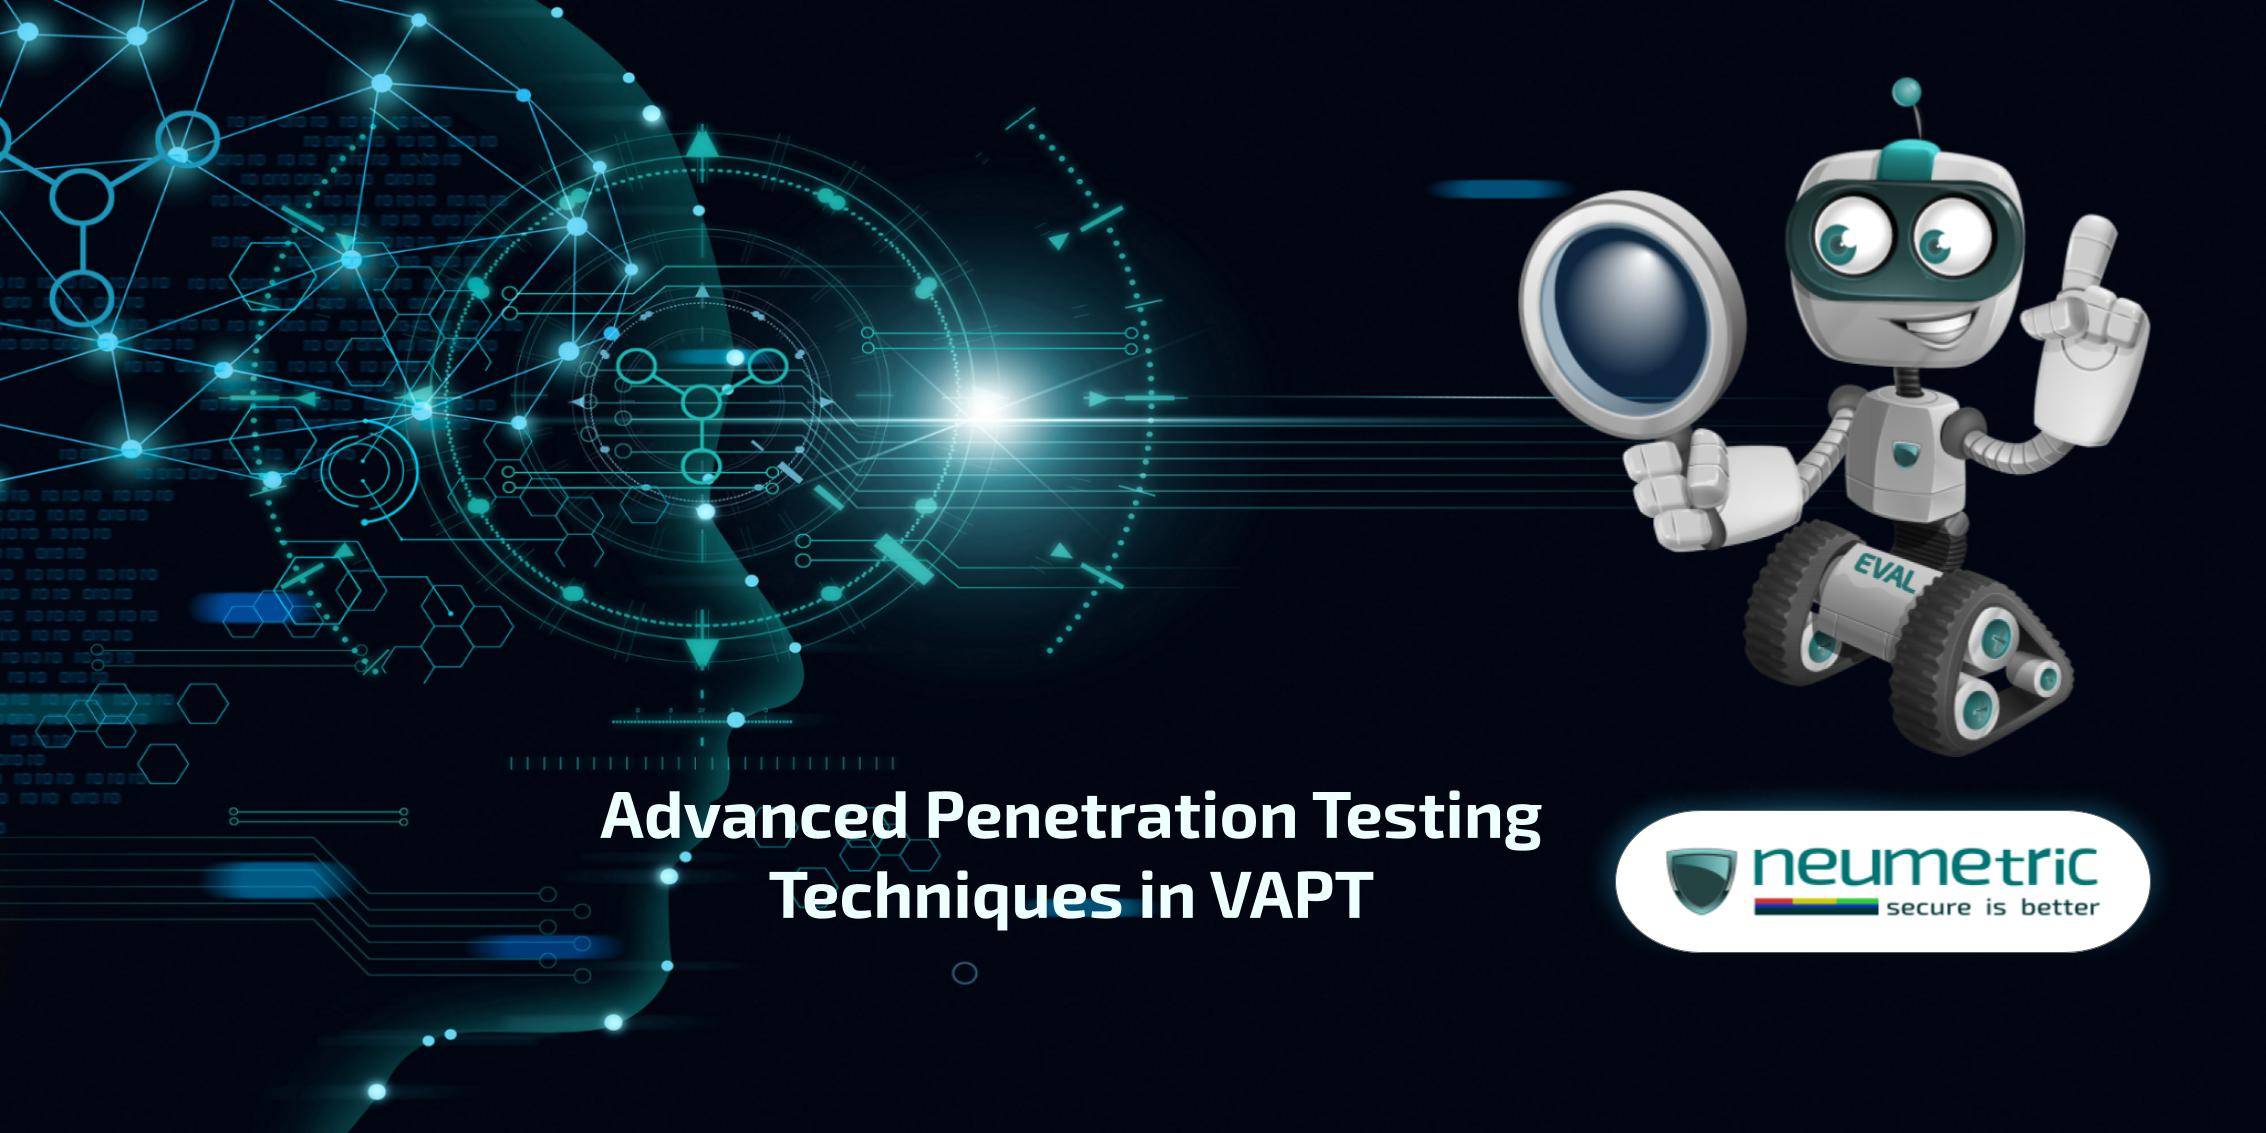 Advanced penetration testing techniques in VAPT